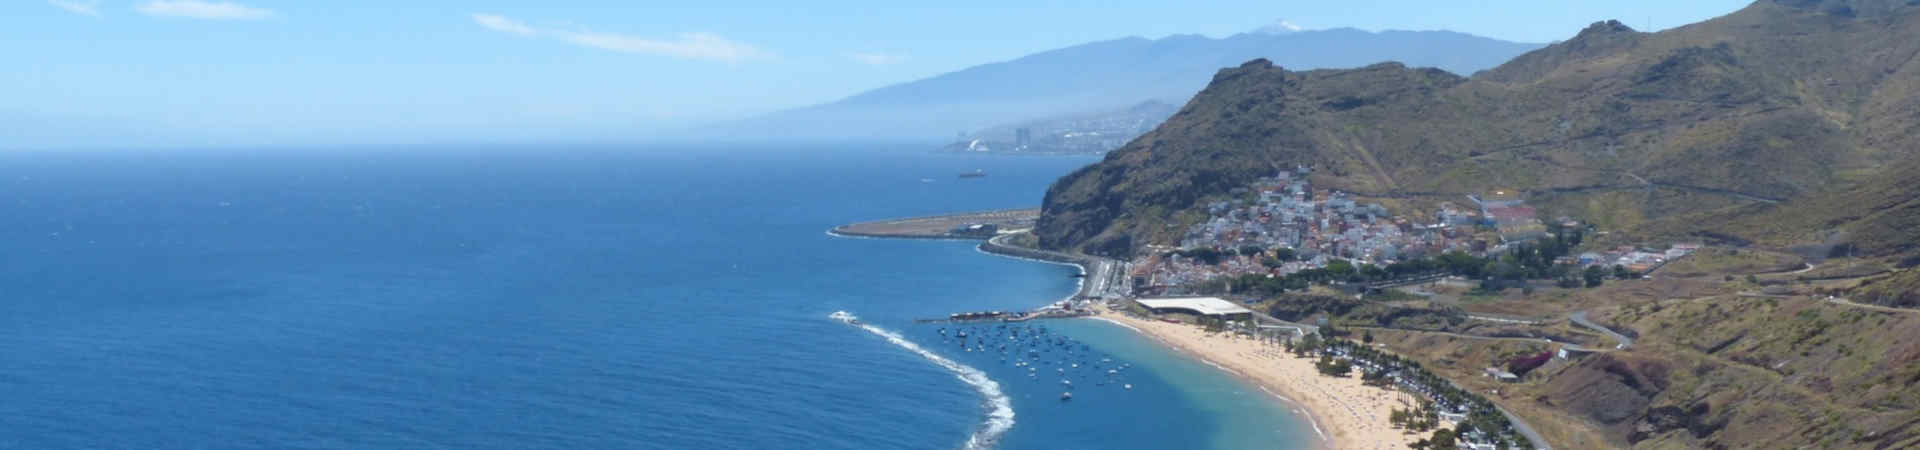 Imagen recurso del puerto de destino Tenerife (Santa Cruz) para la ruta en ferry Cádiz - Tenerife (Santa Cruz)